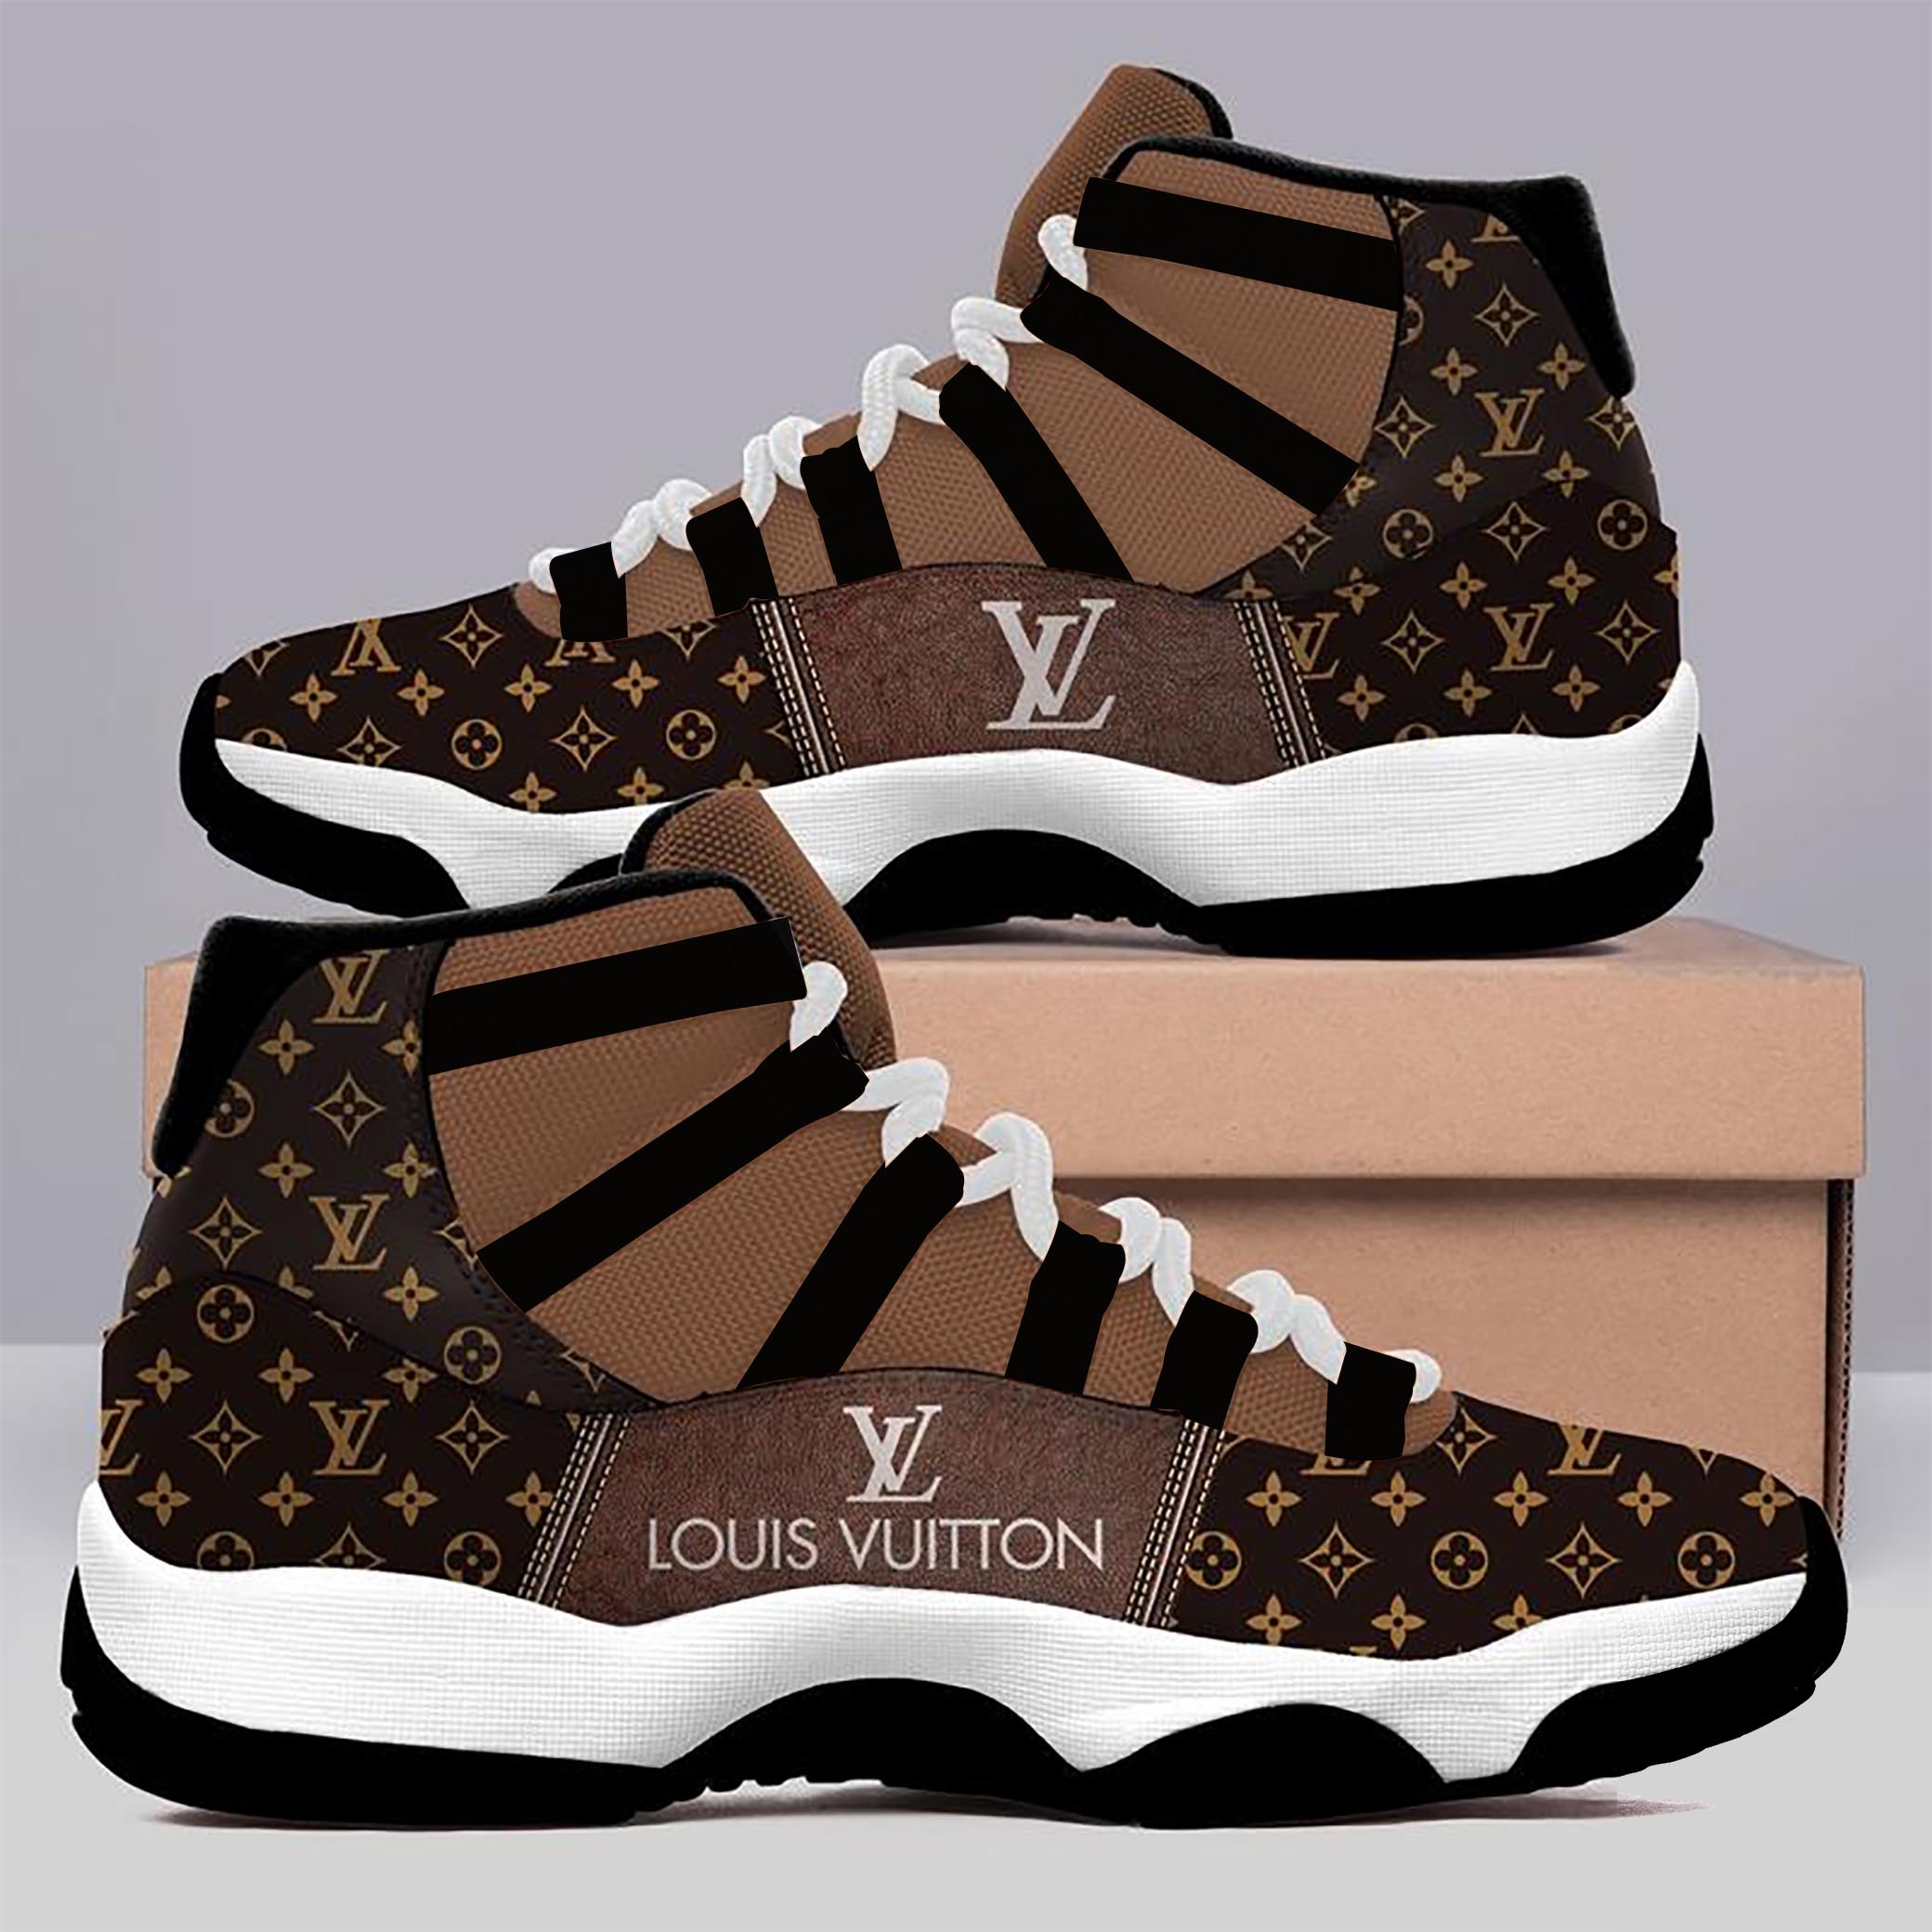 Louis Vuitton Black Monogram Air Jordan 11 Sneakers Shoes Hot 2022 LV Gifts For Men Women HT